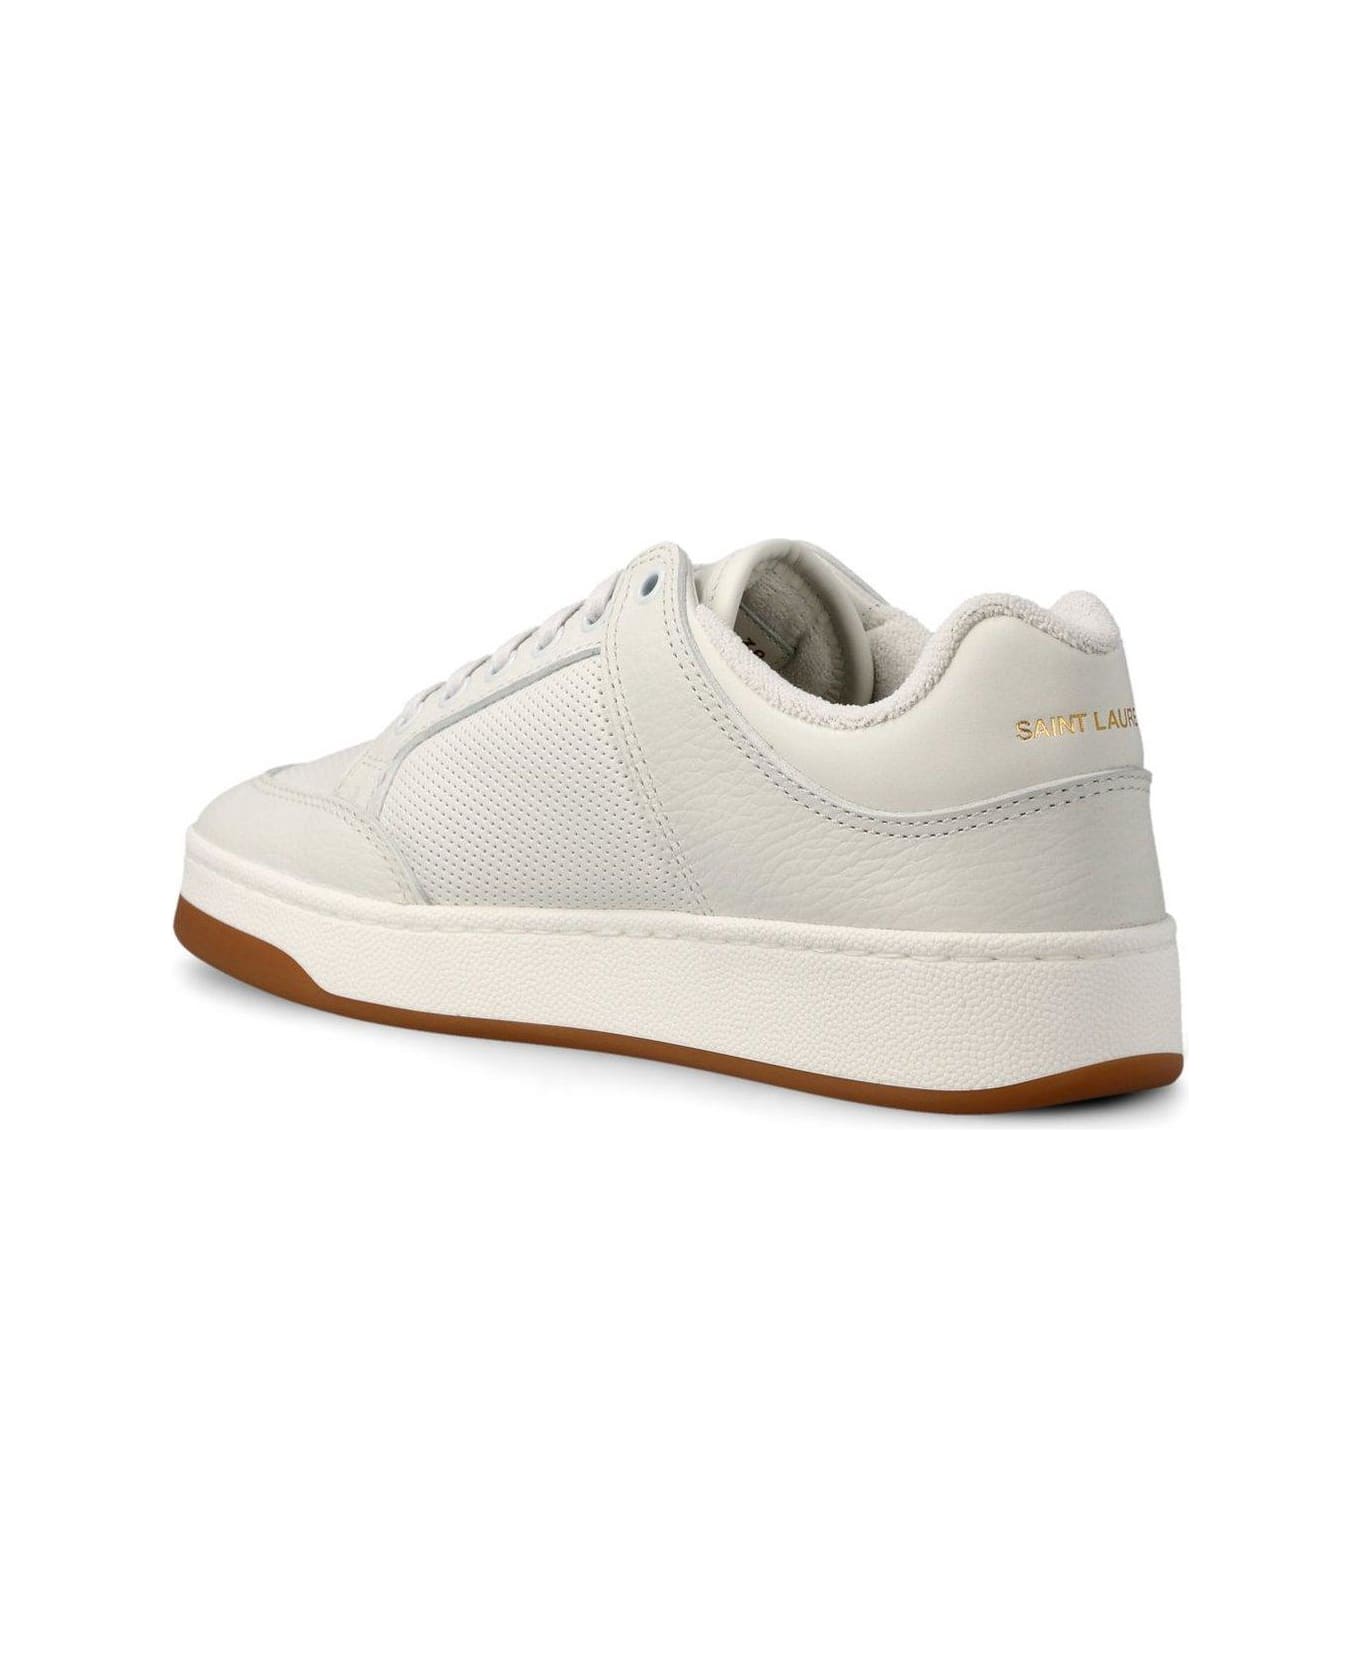 Saint Laurent Sl/61 Lace-up Sneakers - Blanc Opt/blanc Opt/ スニーカー